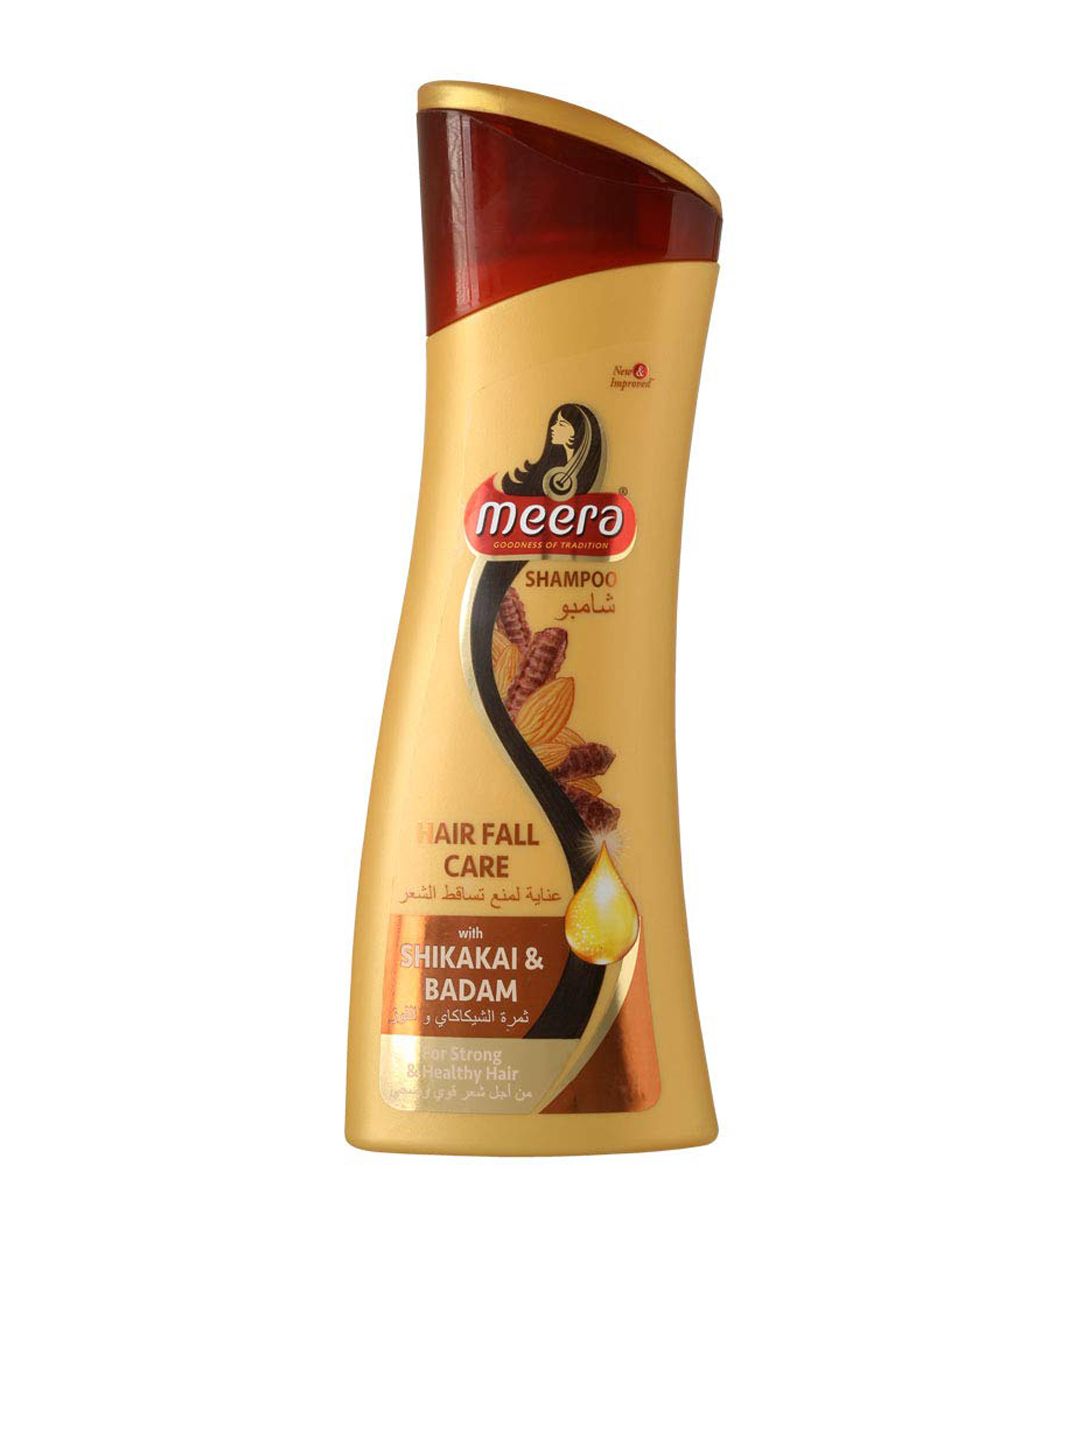 Meera GOODNESS OF TRADITION Hairfall Care Shampoo Infused with Shikakai & Badam 180ml Price in India